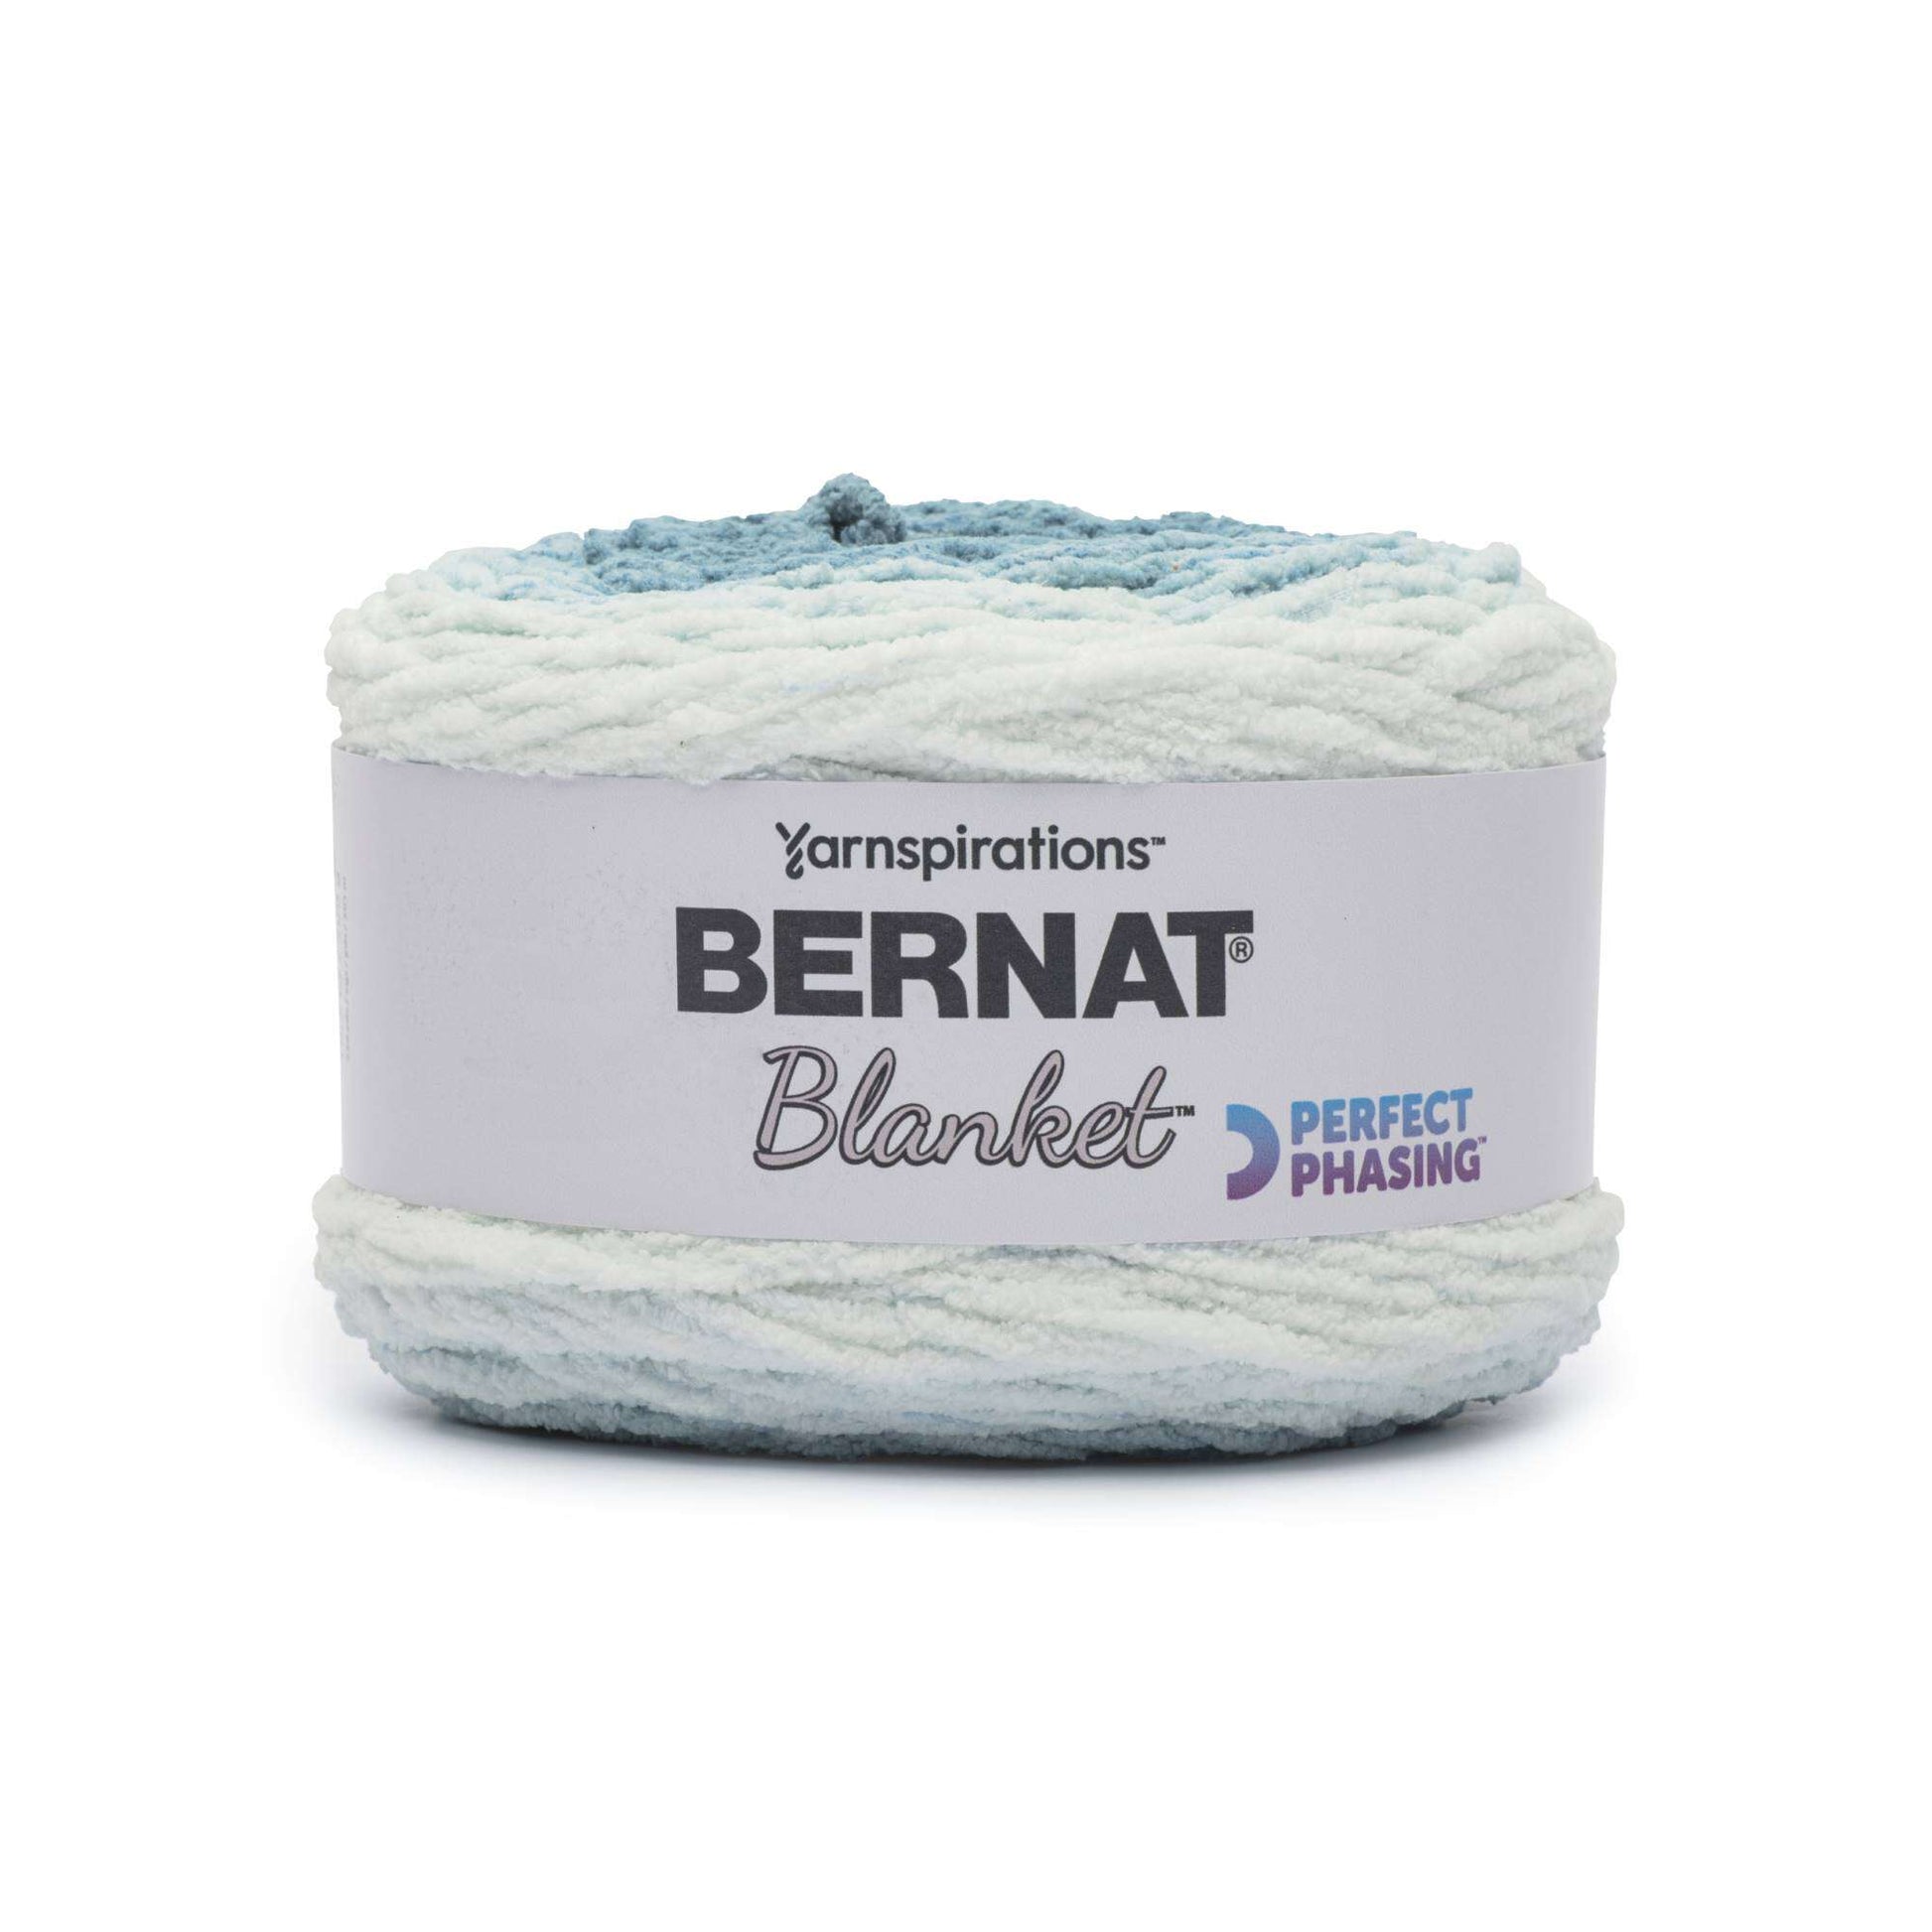 Bernat Blanket Perfect Phasing Yarn (300g/10.5oz) | Yarnspirations